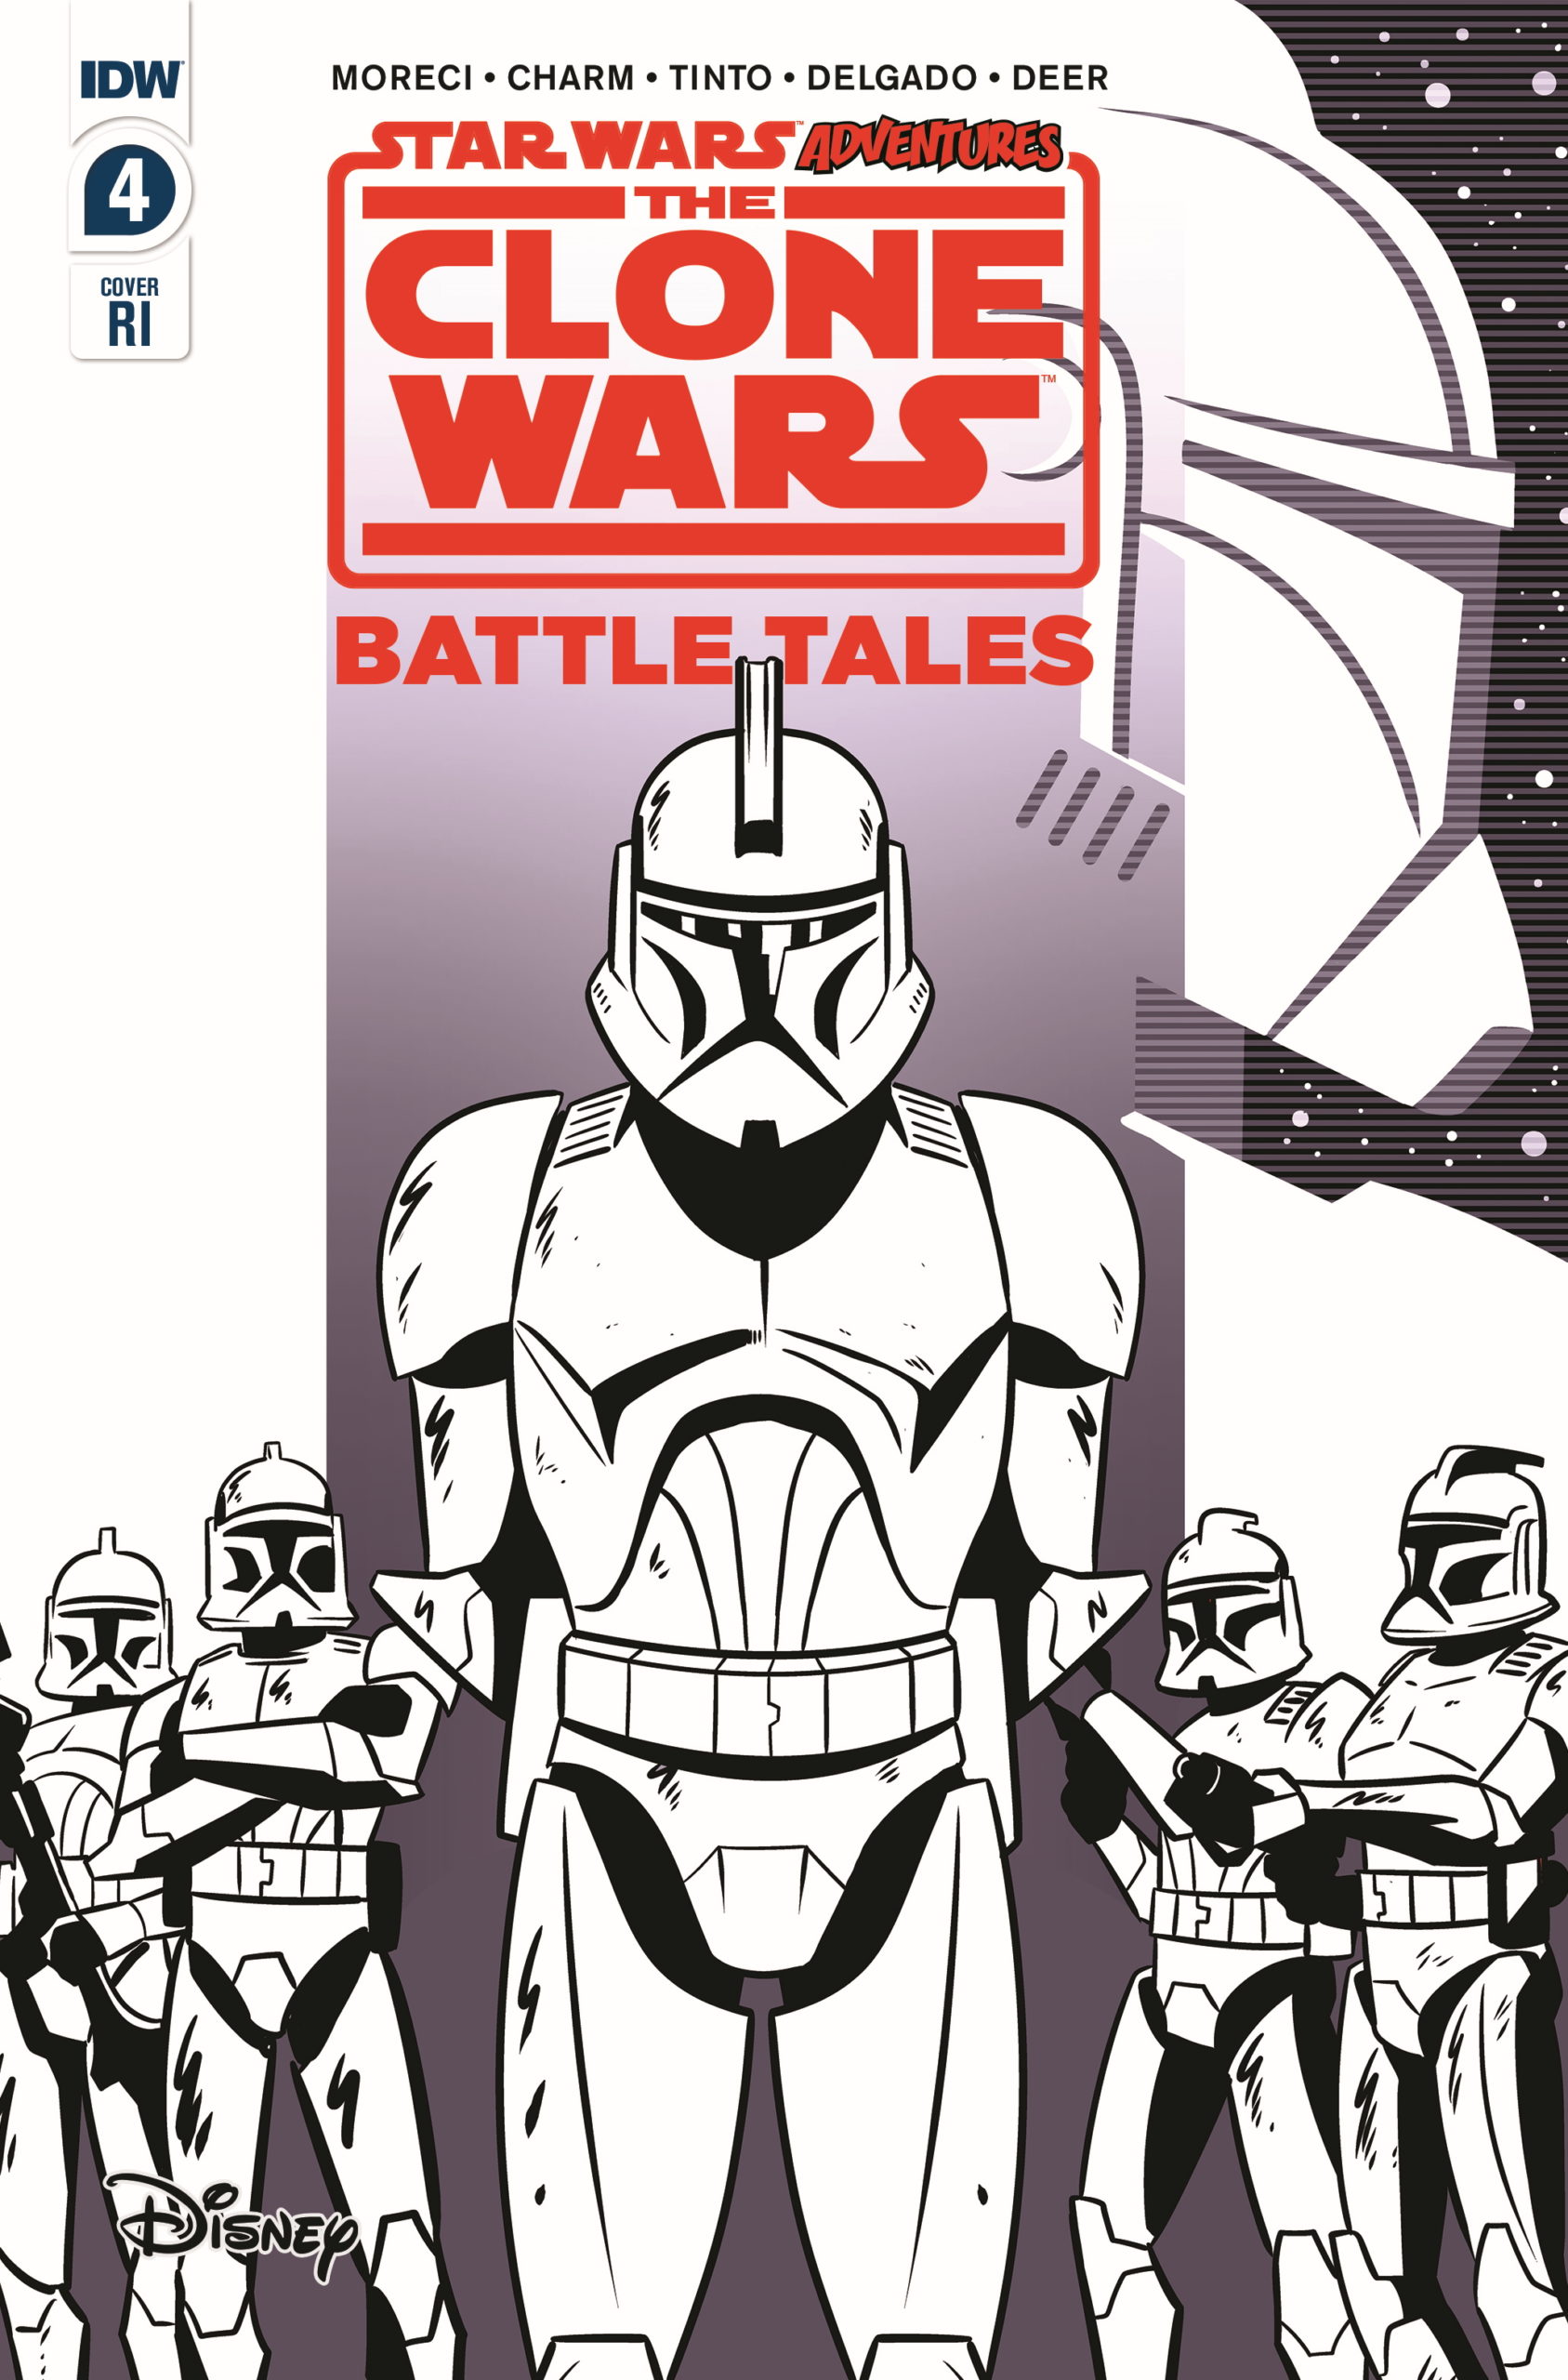 The Clone Wars - Battle Tales #4 (Derek Charm Variant Cover) (22.04.2020)